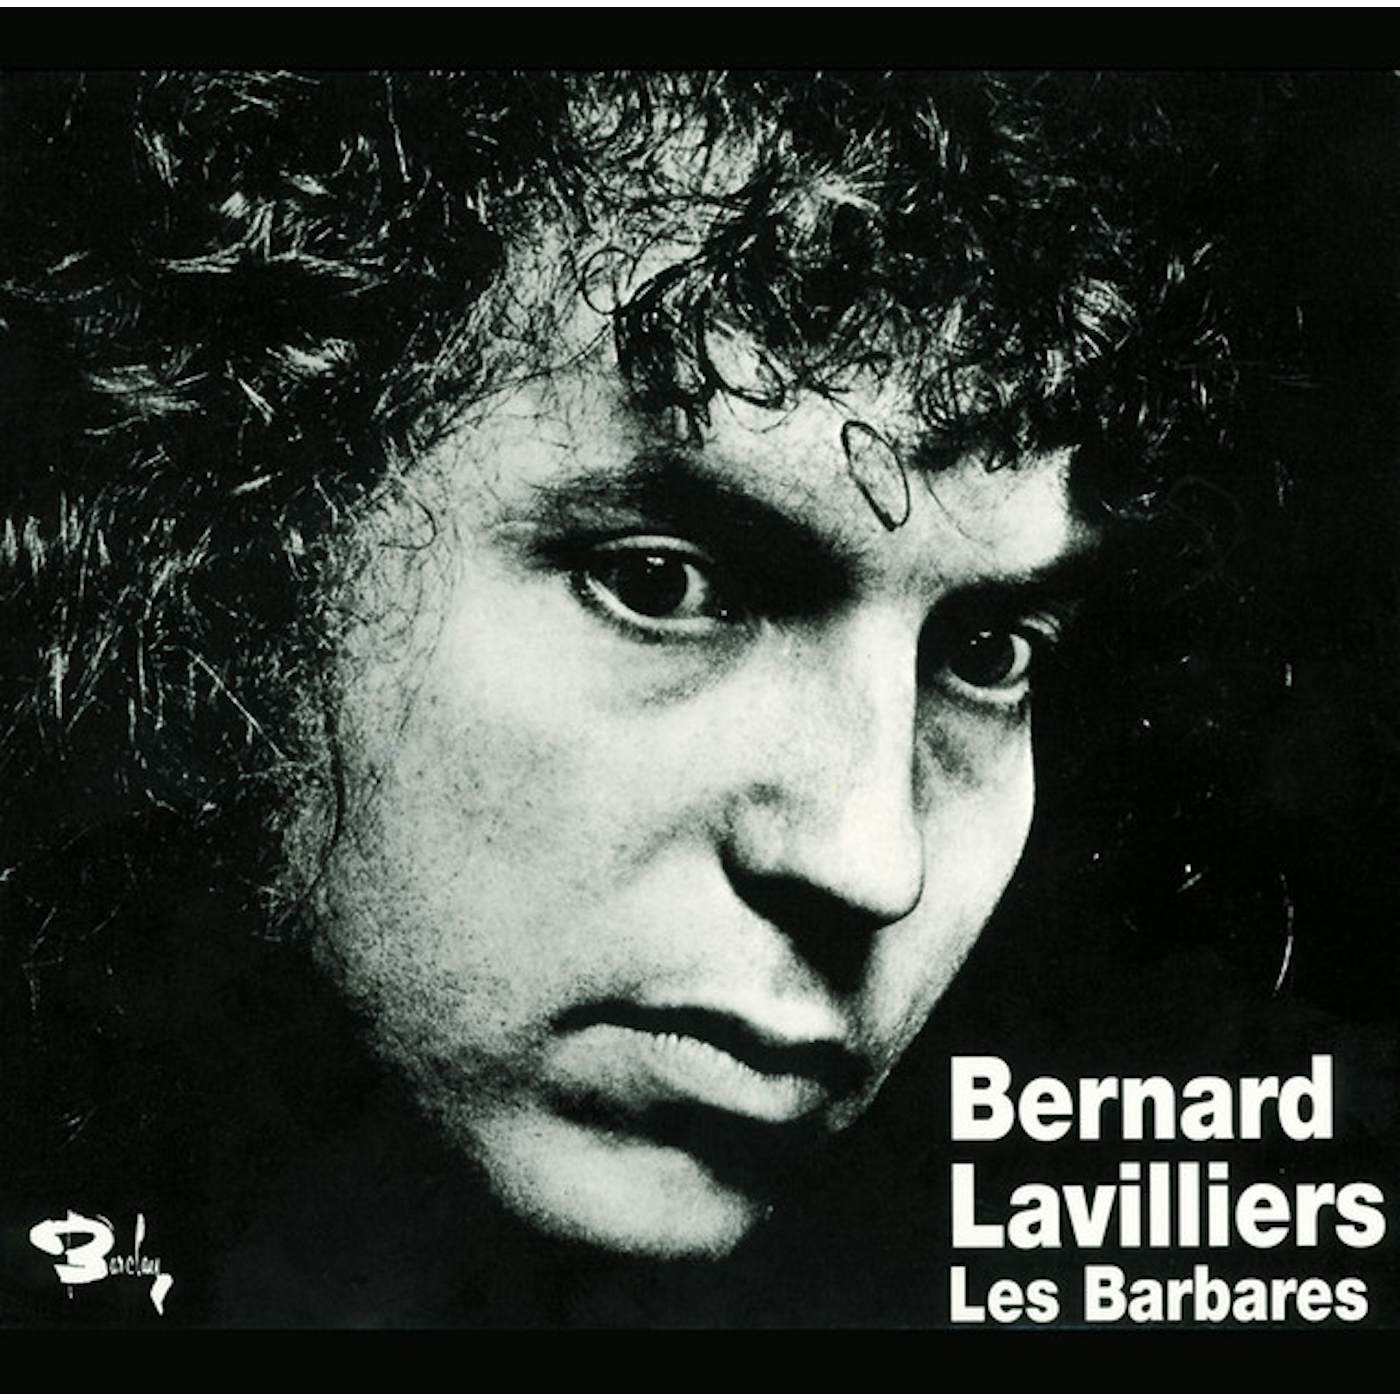 Bernard Lavilliers Les Barbares Vinyl Record